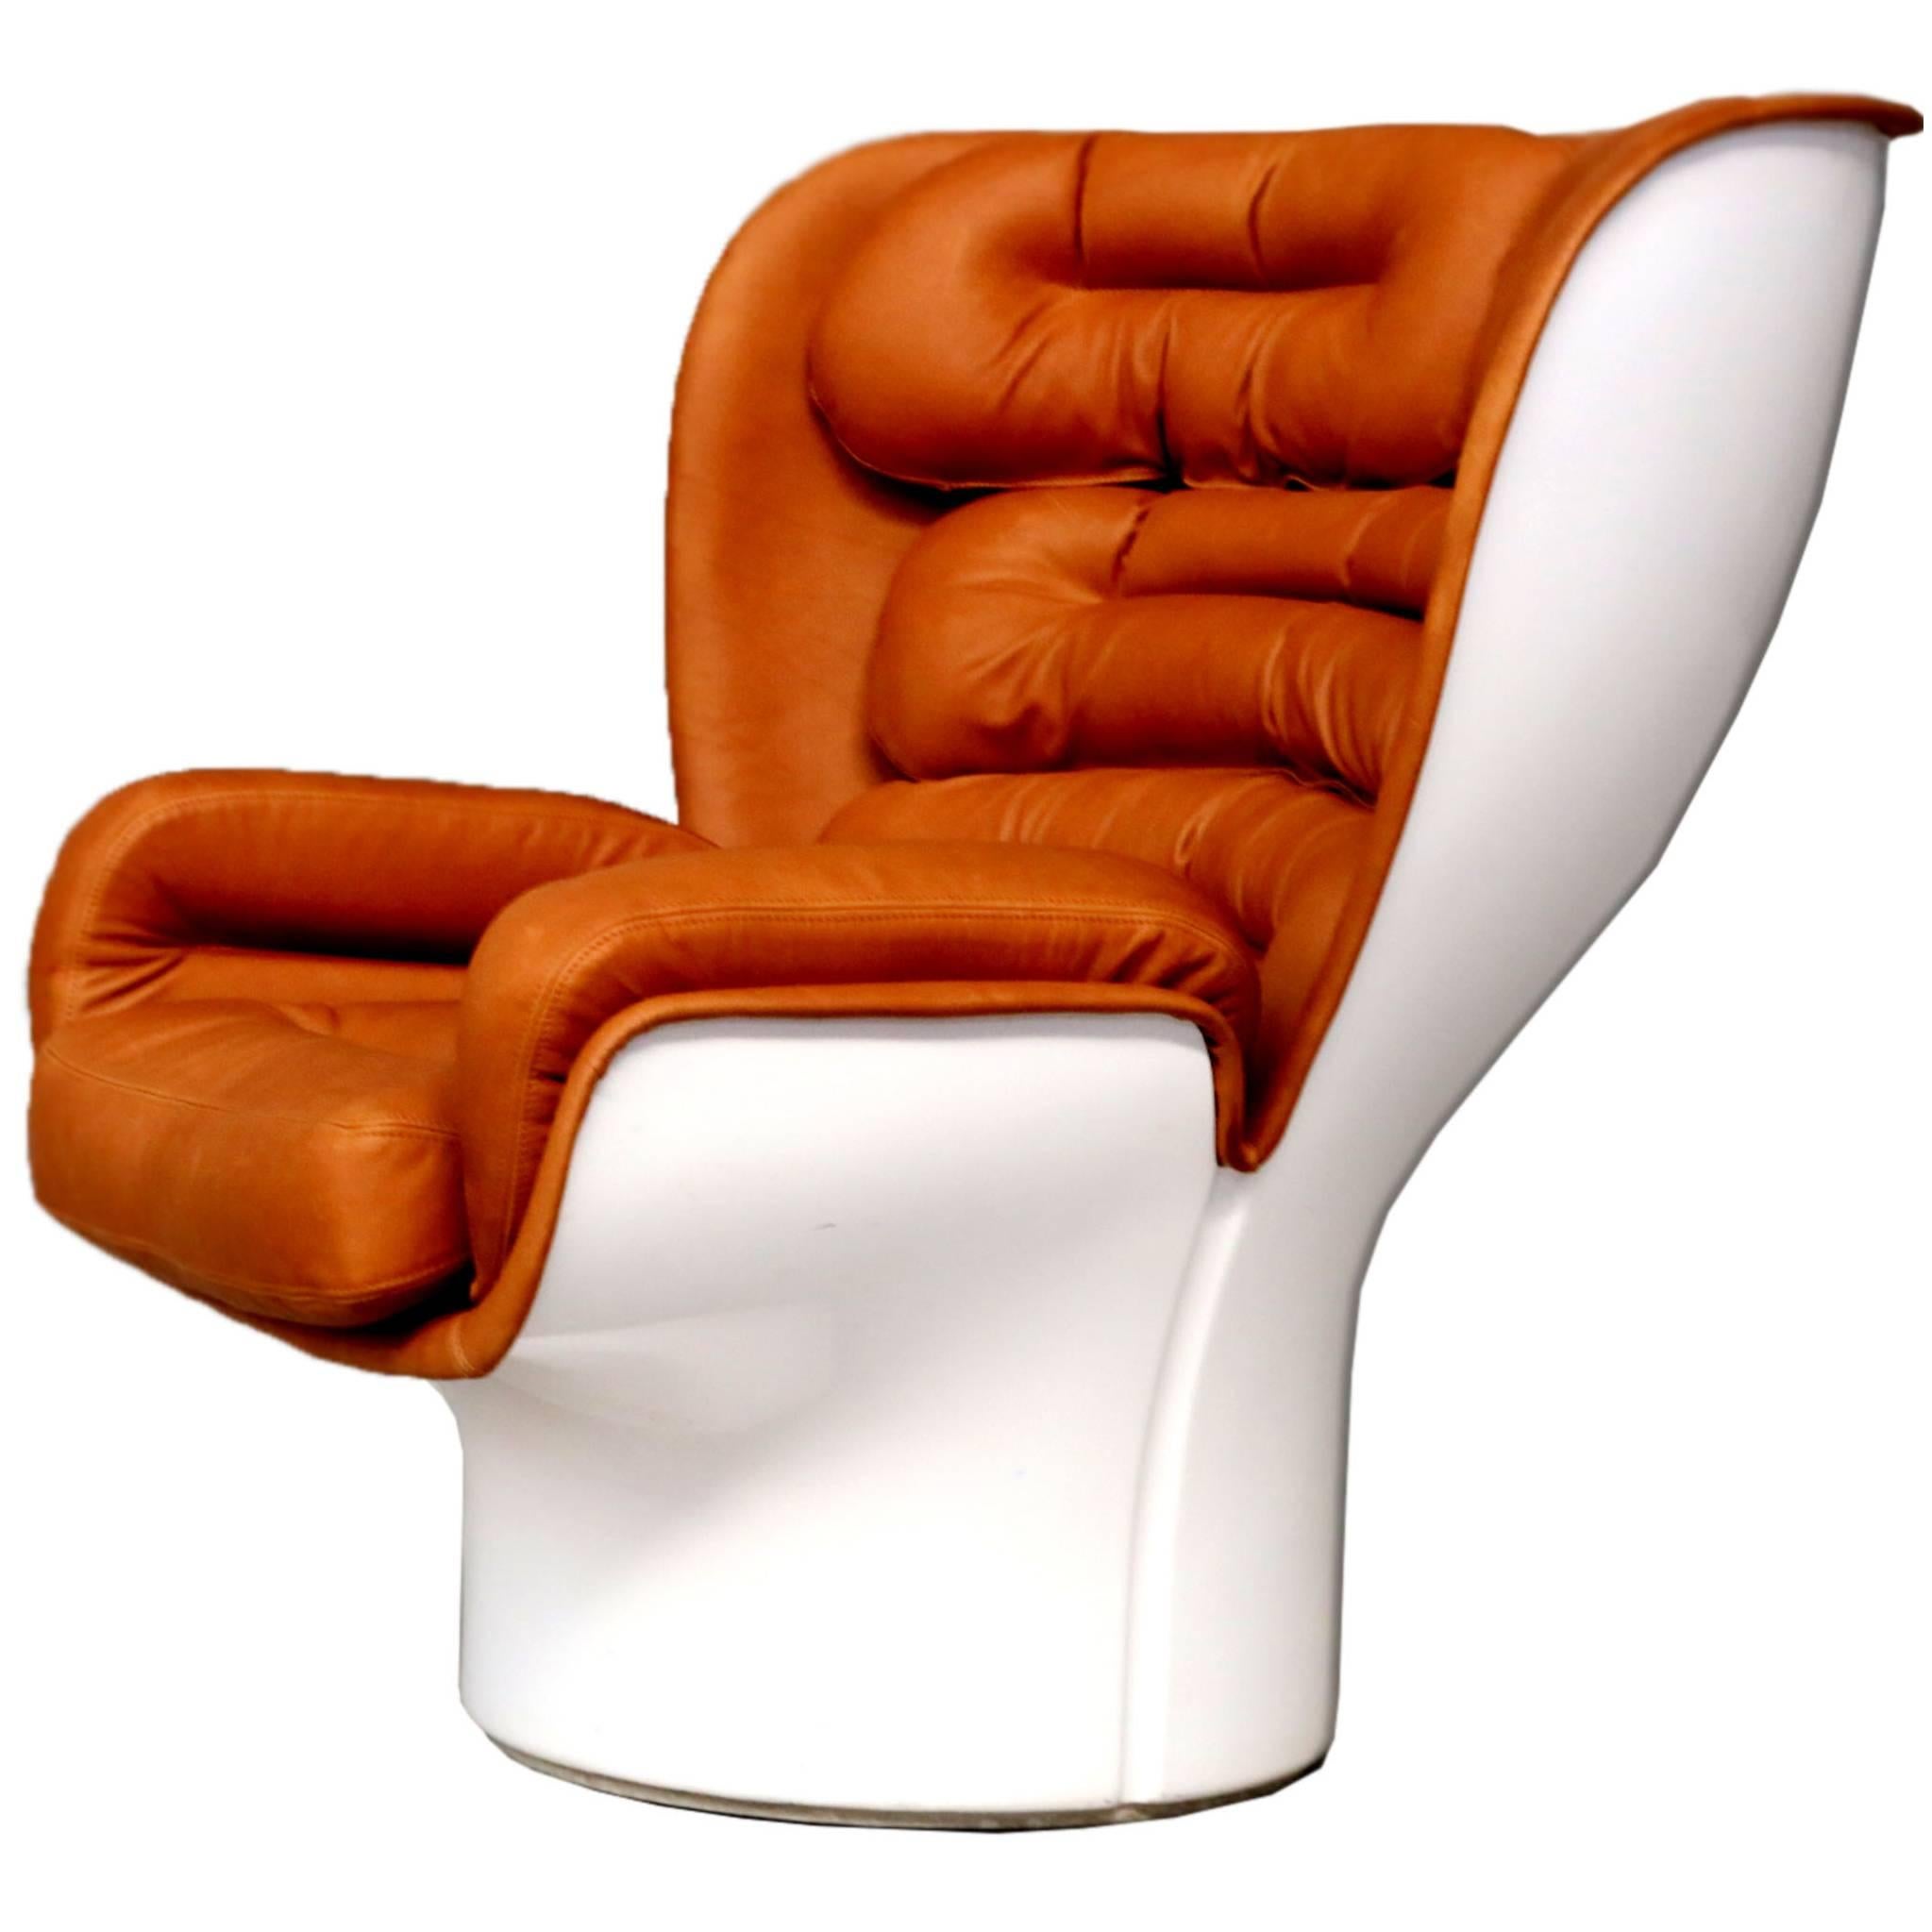 Joe Colombo ELDA Chair Reupholstered in Cognac Aniline Leather